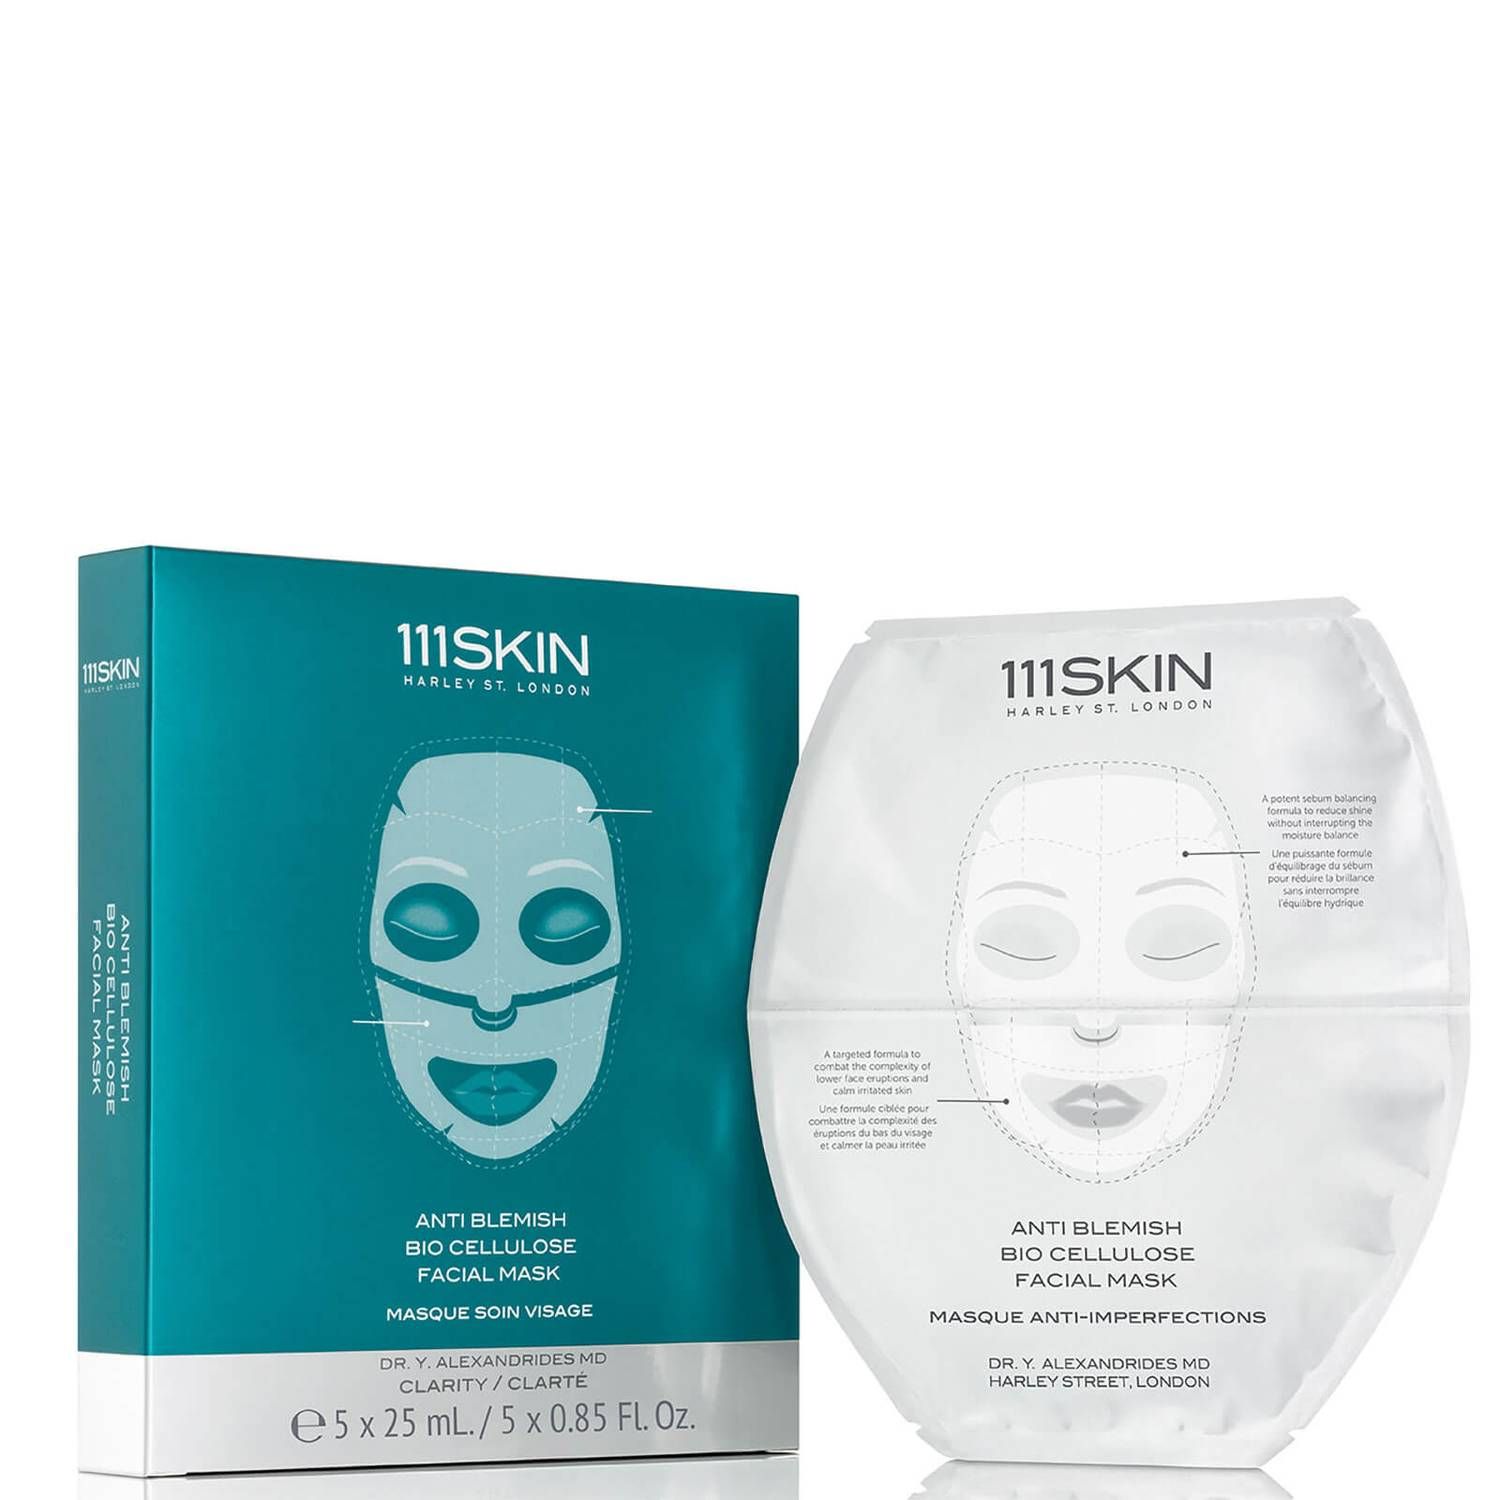 111SKIN Anti Blemish Bio Cellulose Facial Mask (5 count) | Dermstore